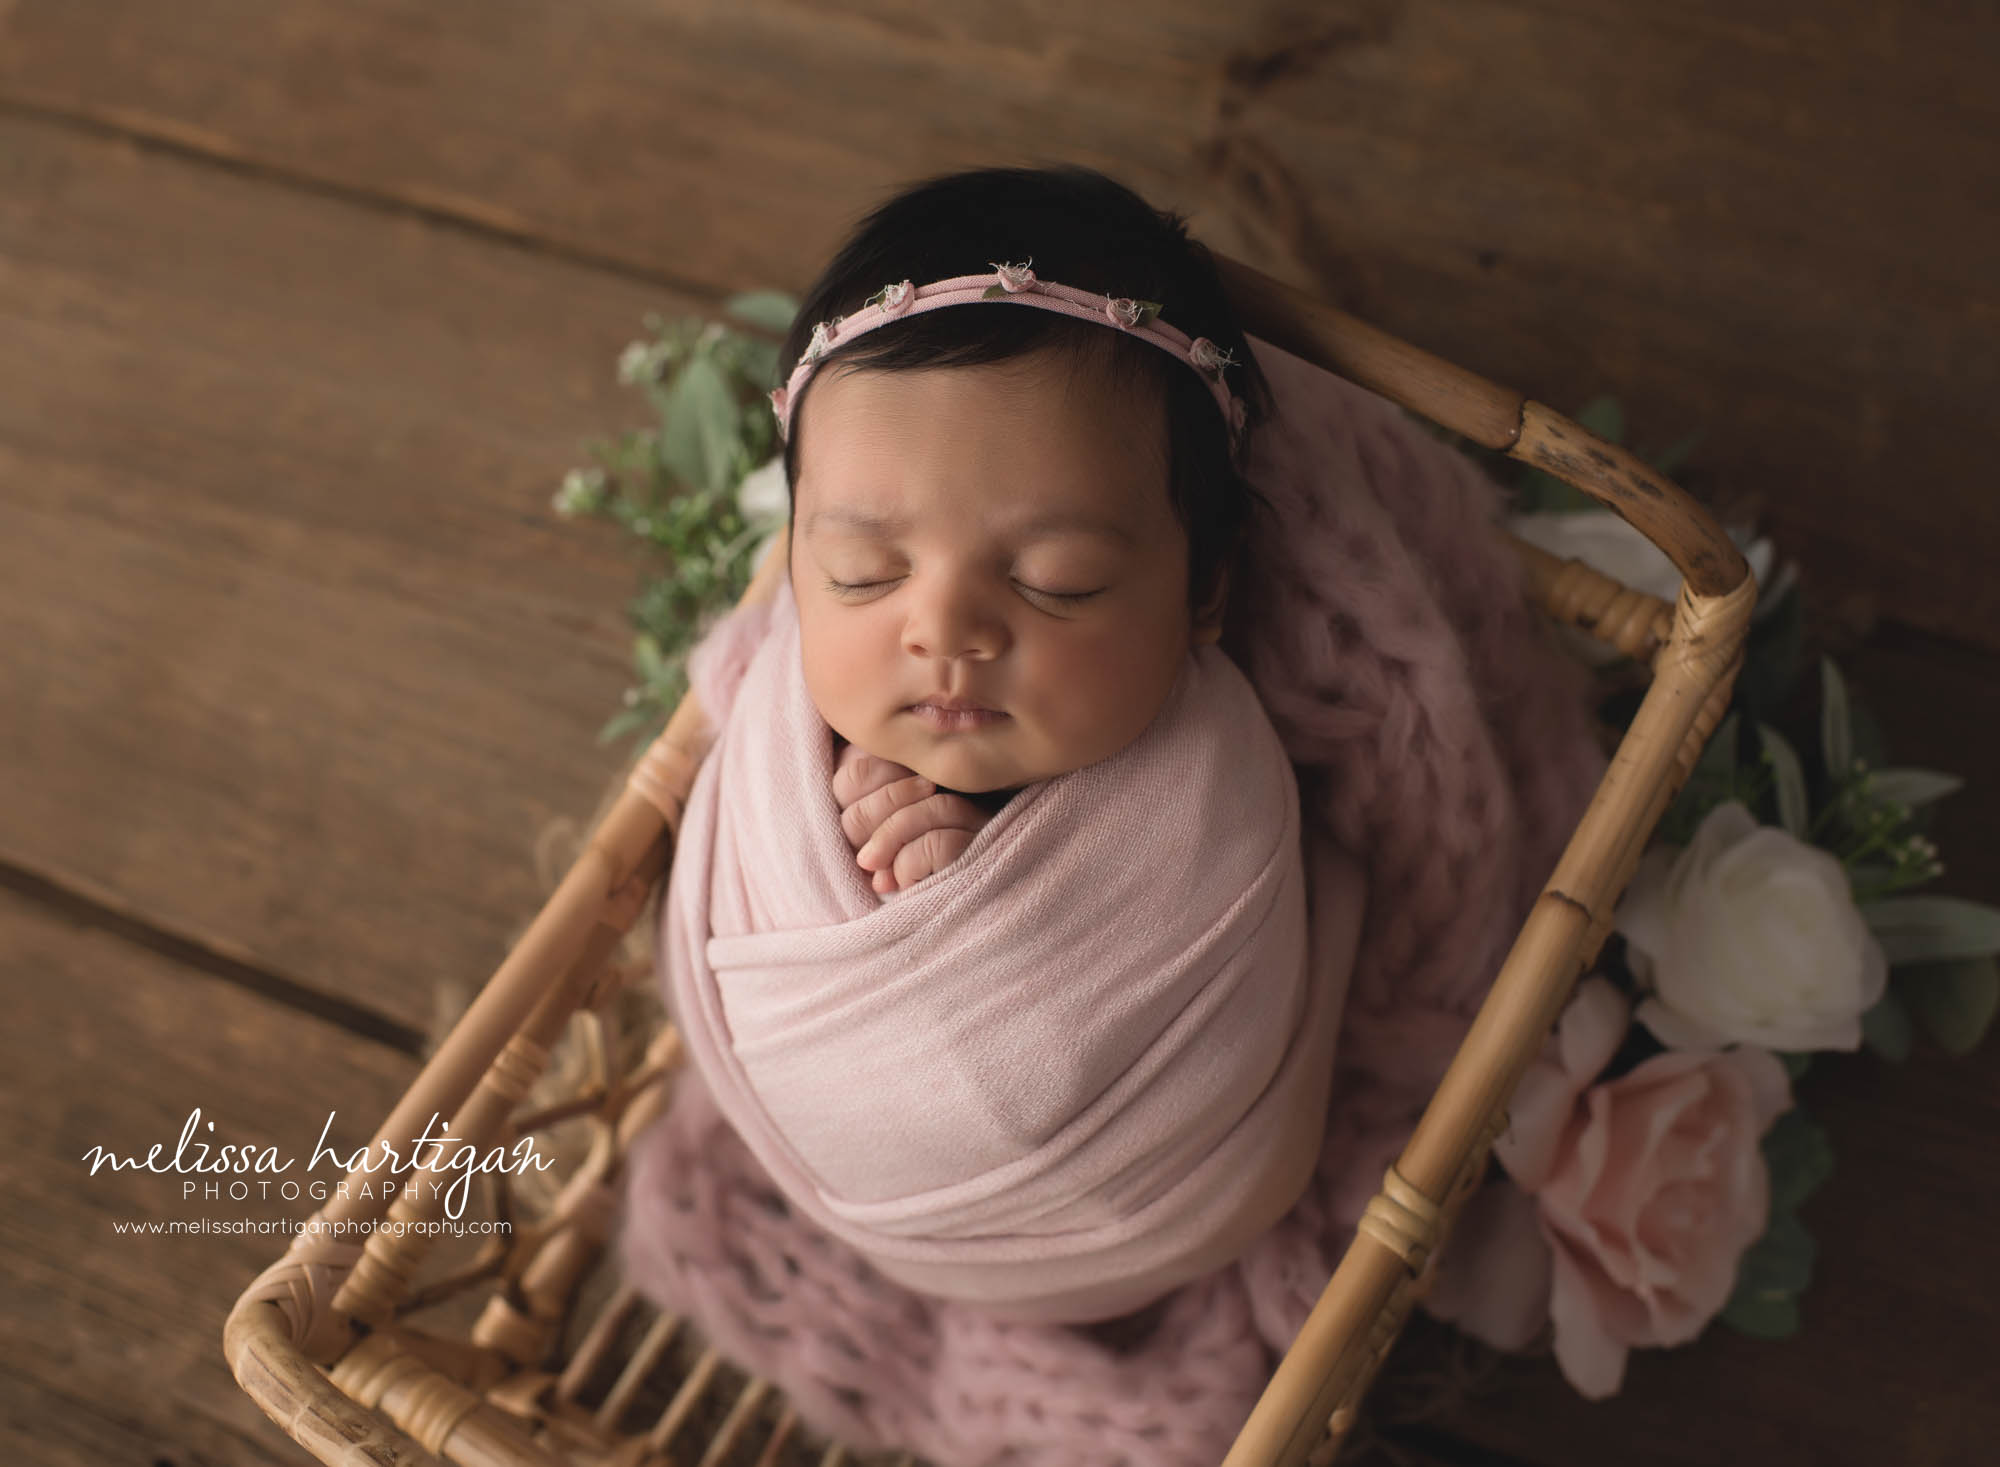 newborn abby girl wrappe din soft baby pink wrap with dainty flower headband CT newborn photography